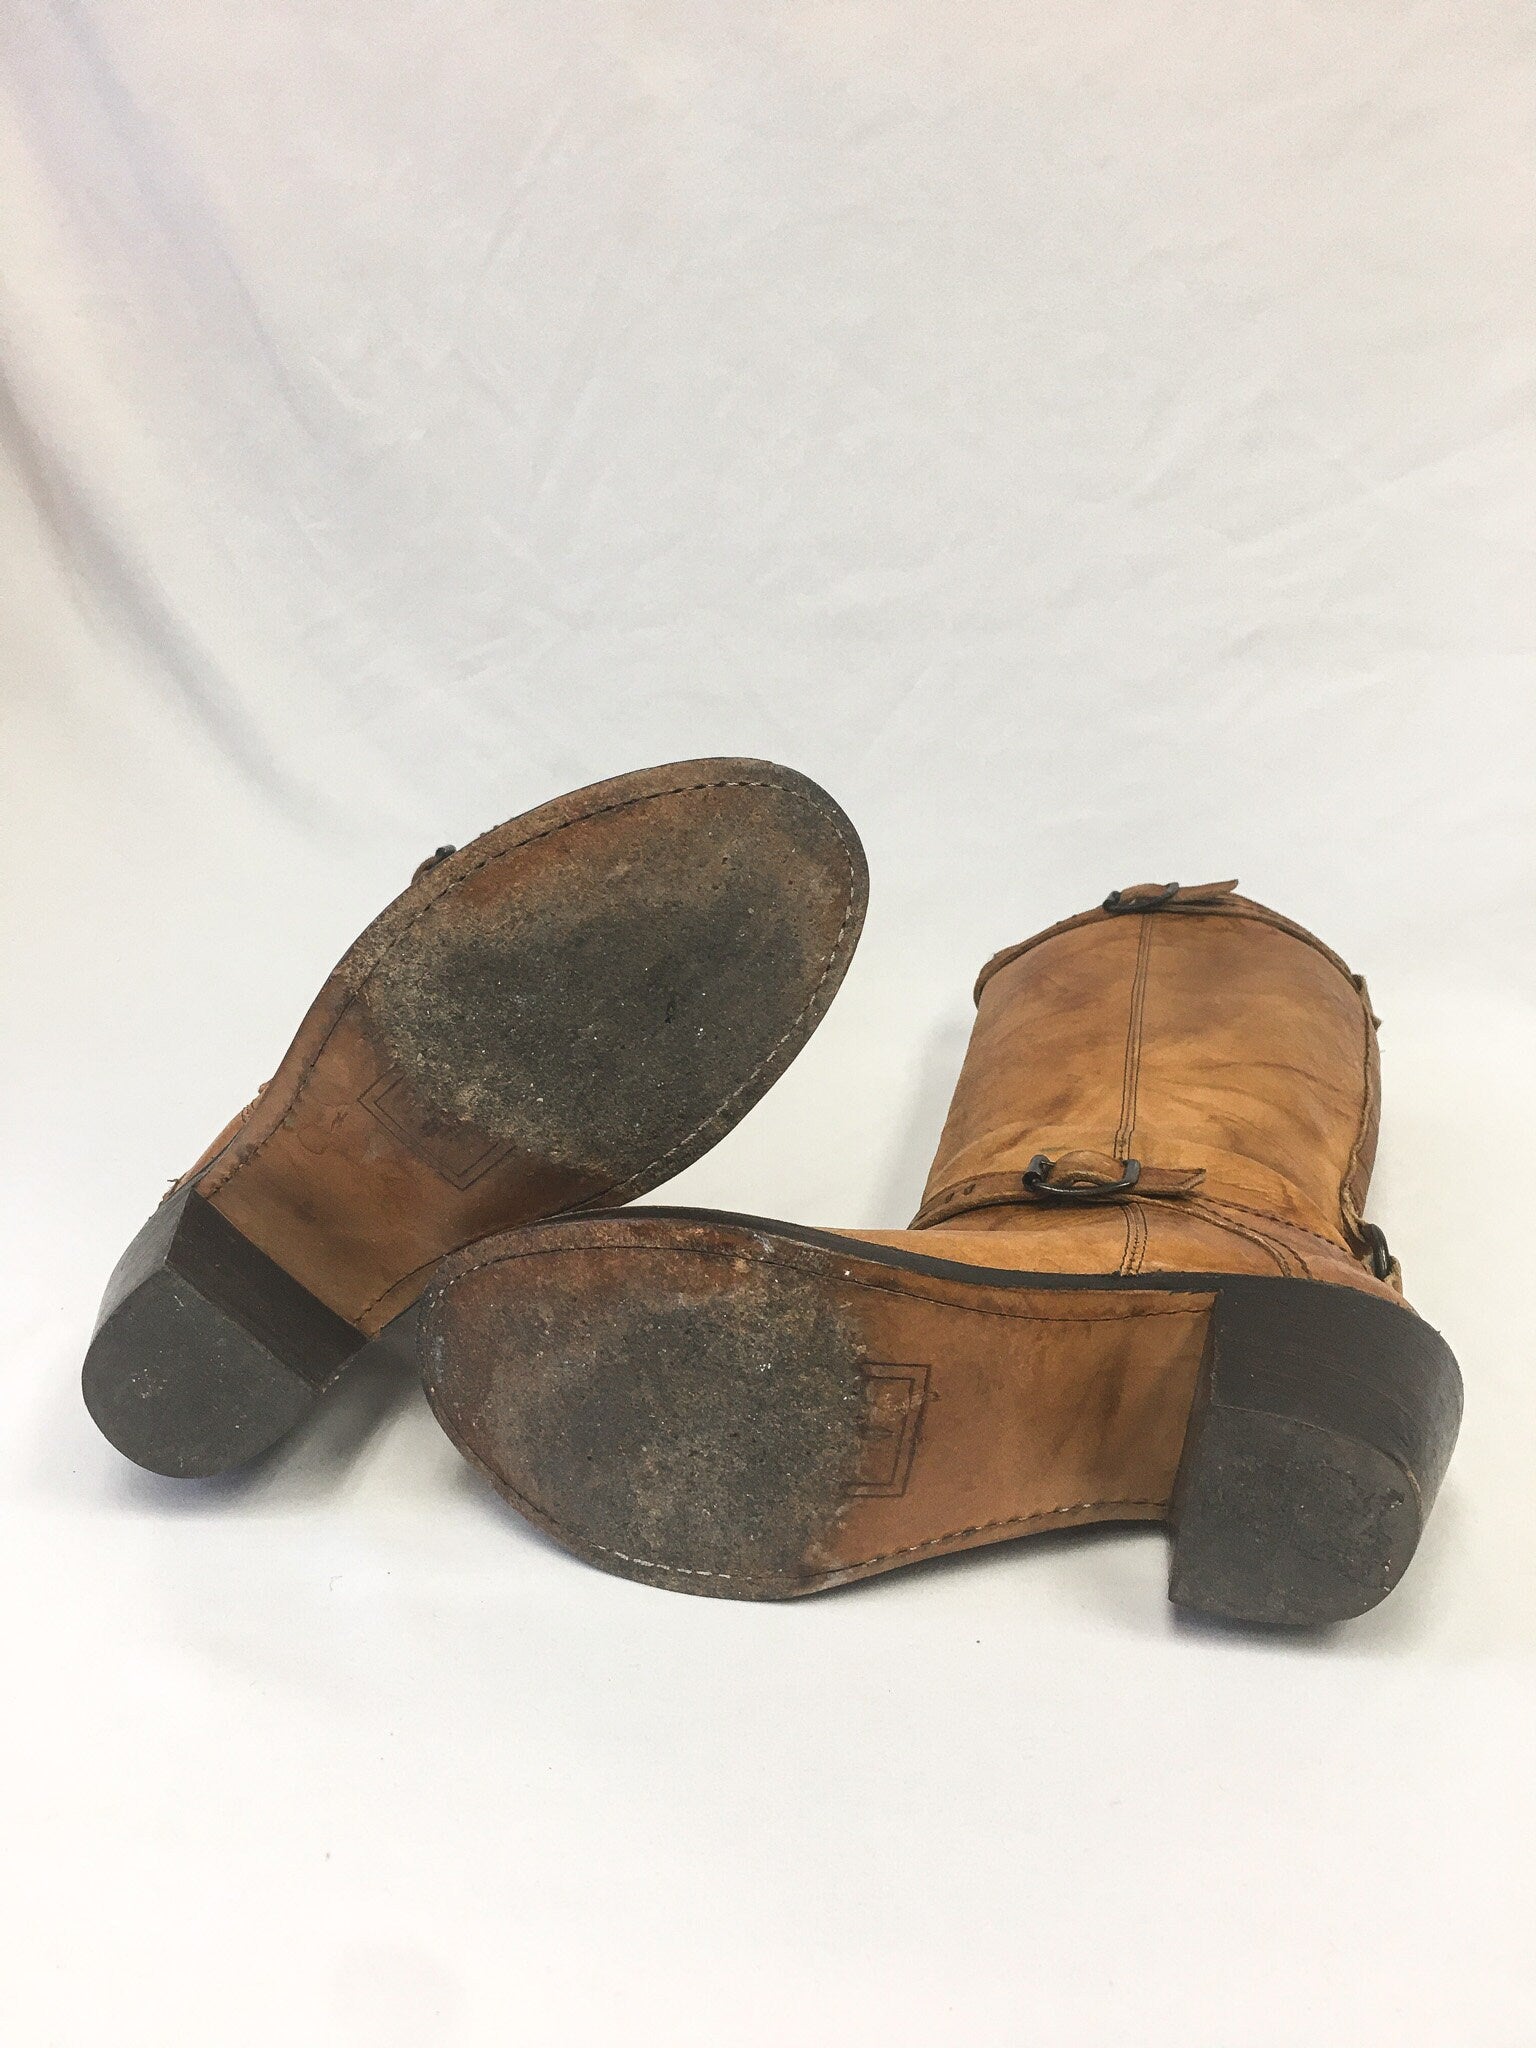 Vintage FRYE Carmen Brown Leather Knee-High Boots, Women's Sz. 8.5B